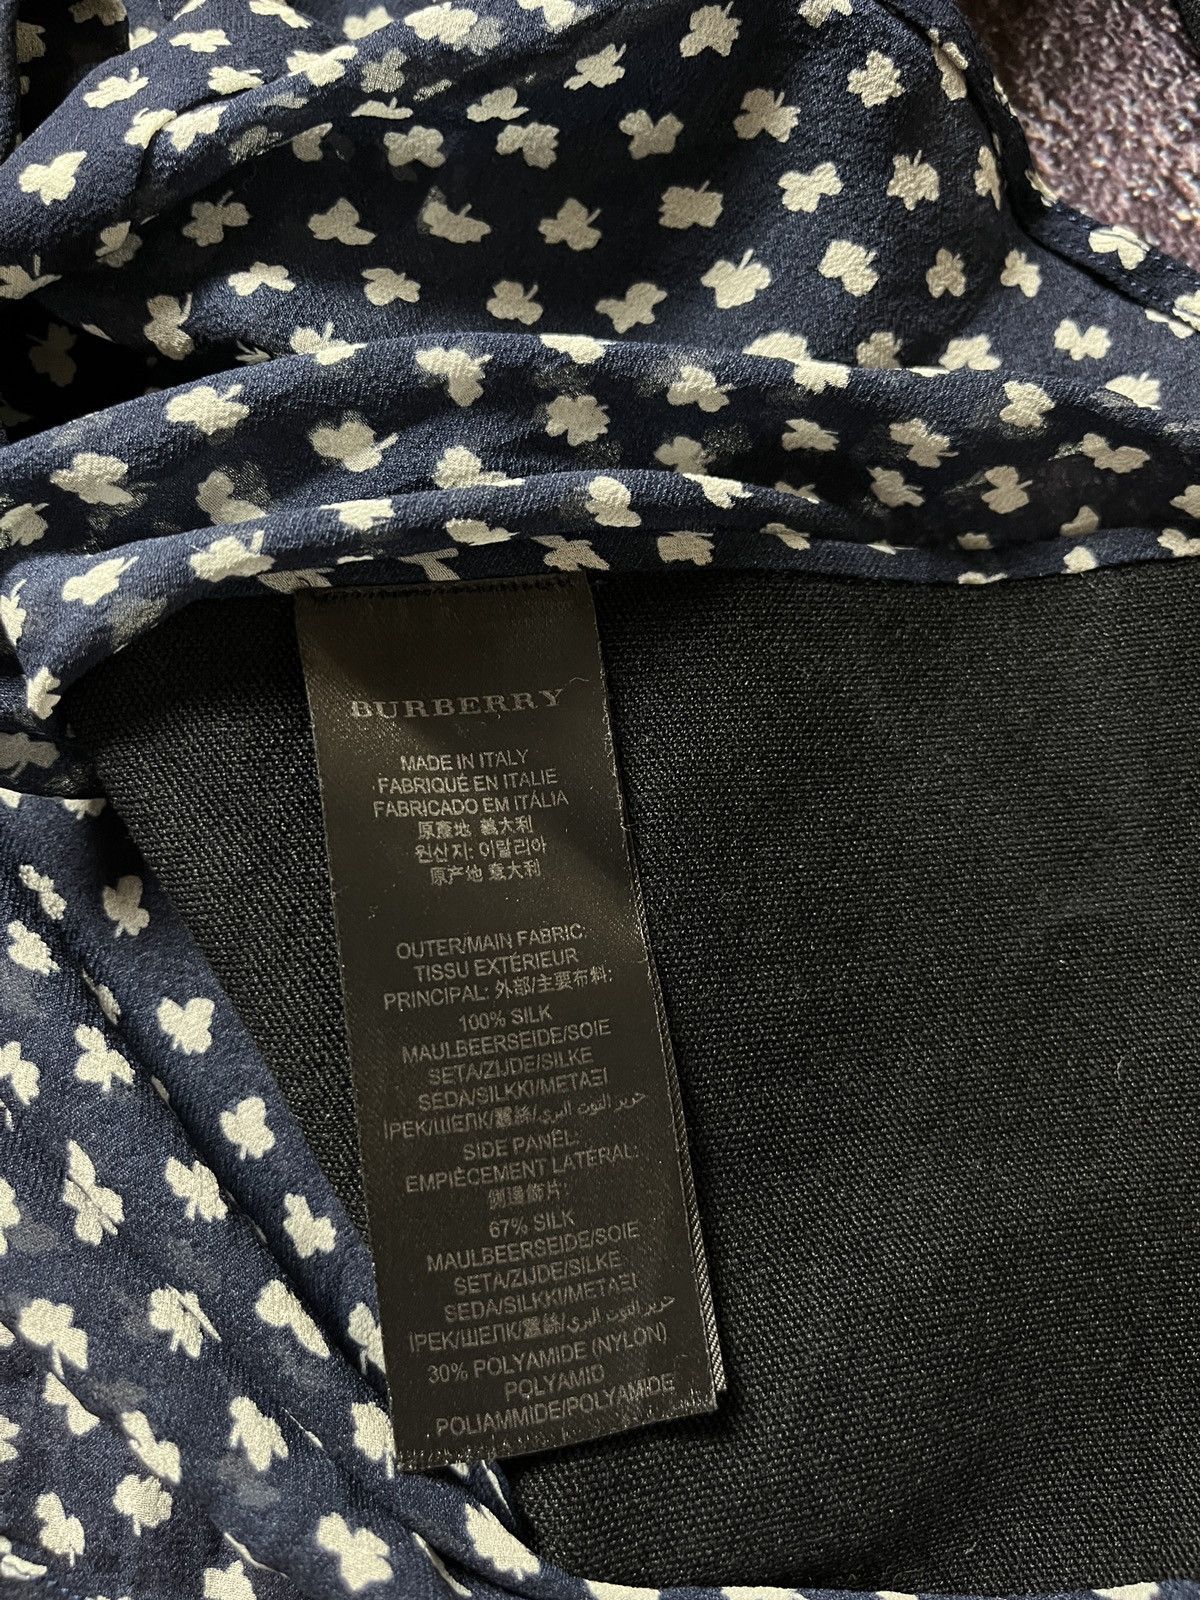 Burberry Prorsum Burberry Prorsum Black Label Floral Print Silk Shirt In Navy Size M / US 6-8 / IT 42-44 - 9 Thumbnail